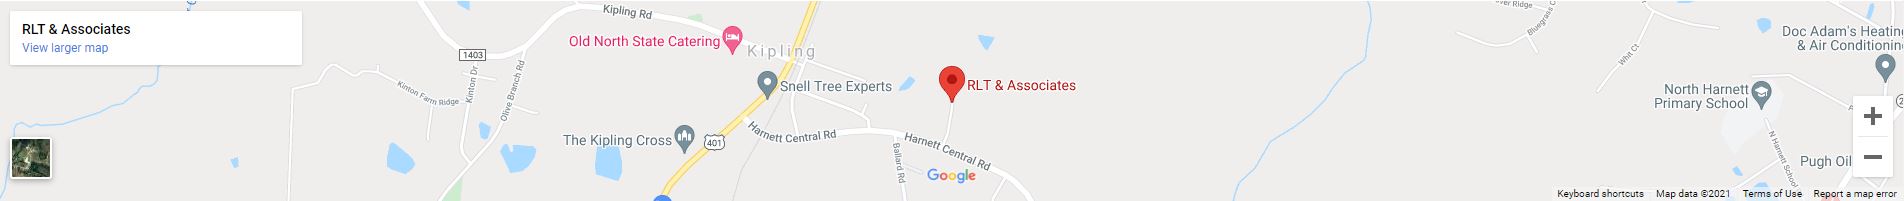 RLT & Associates, Inc.